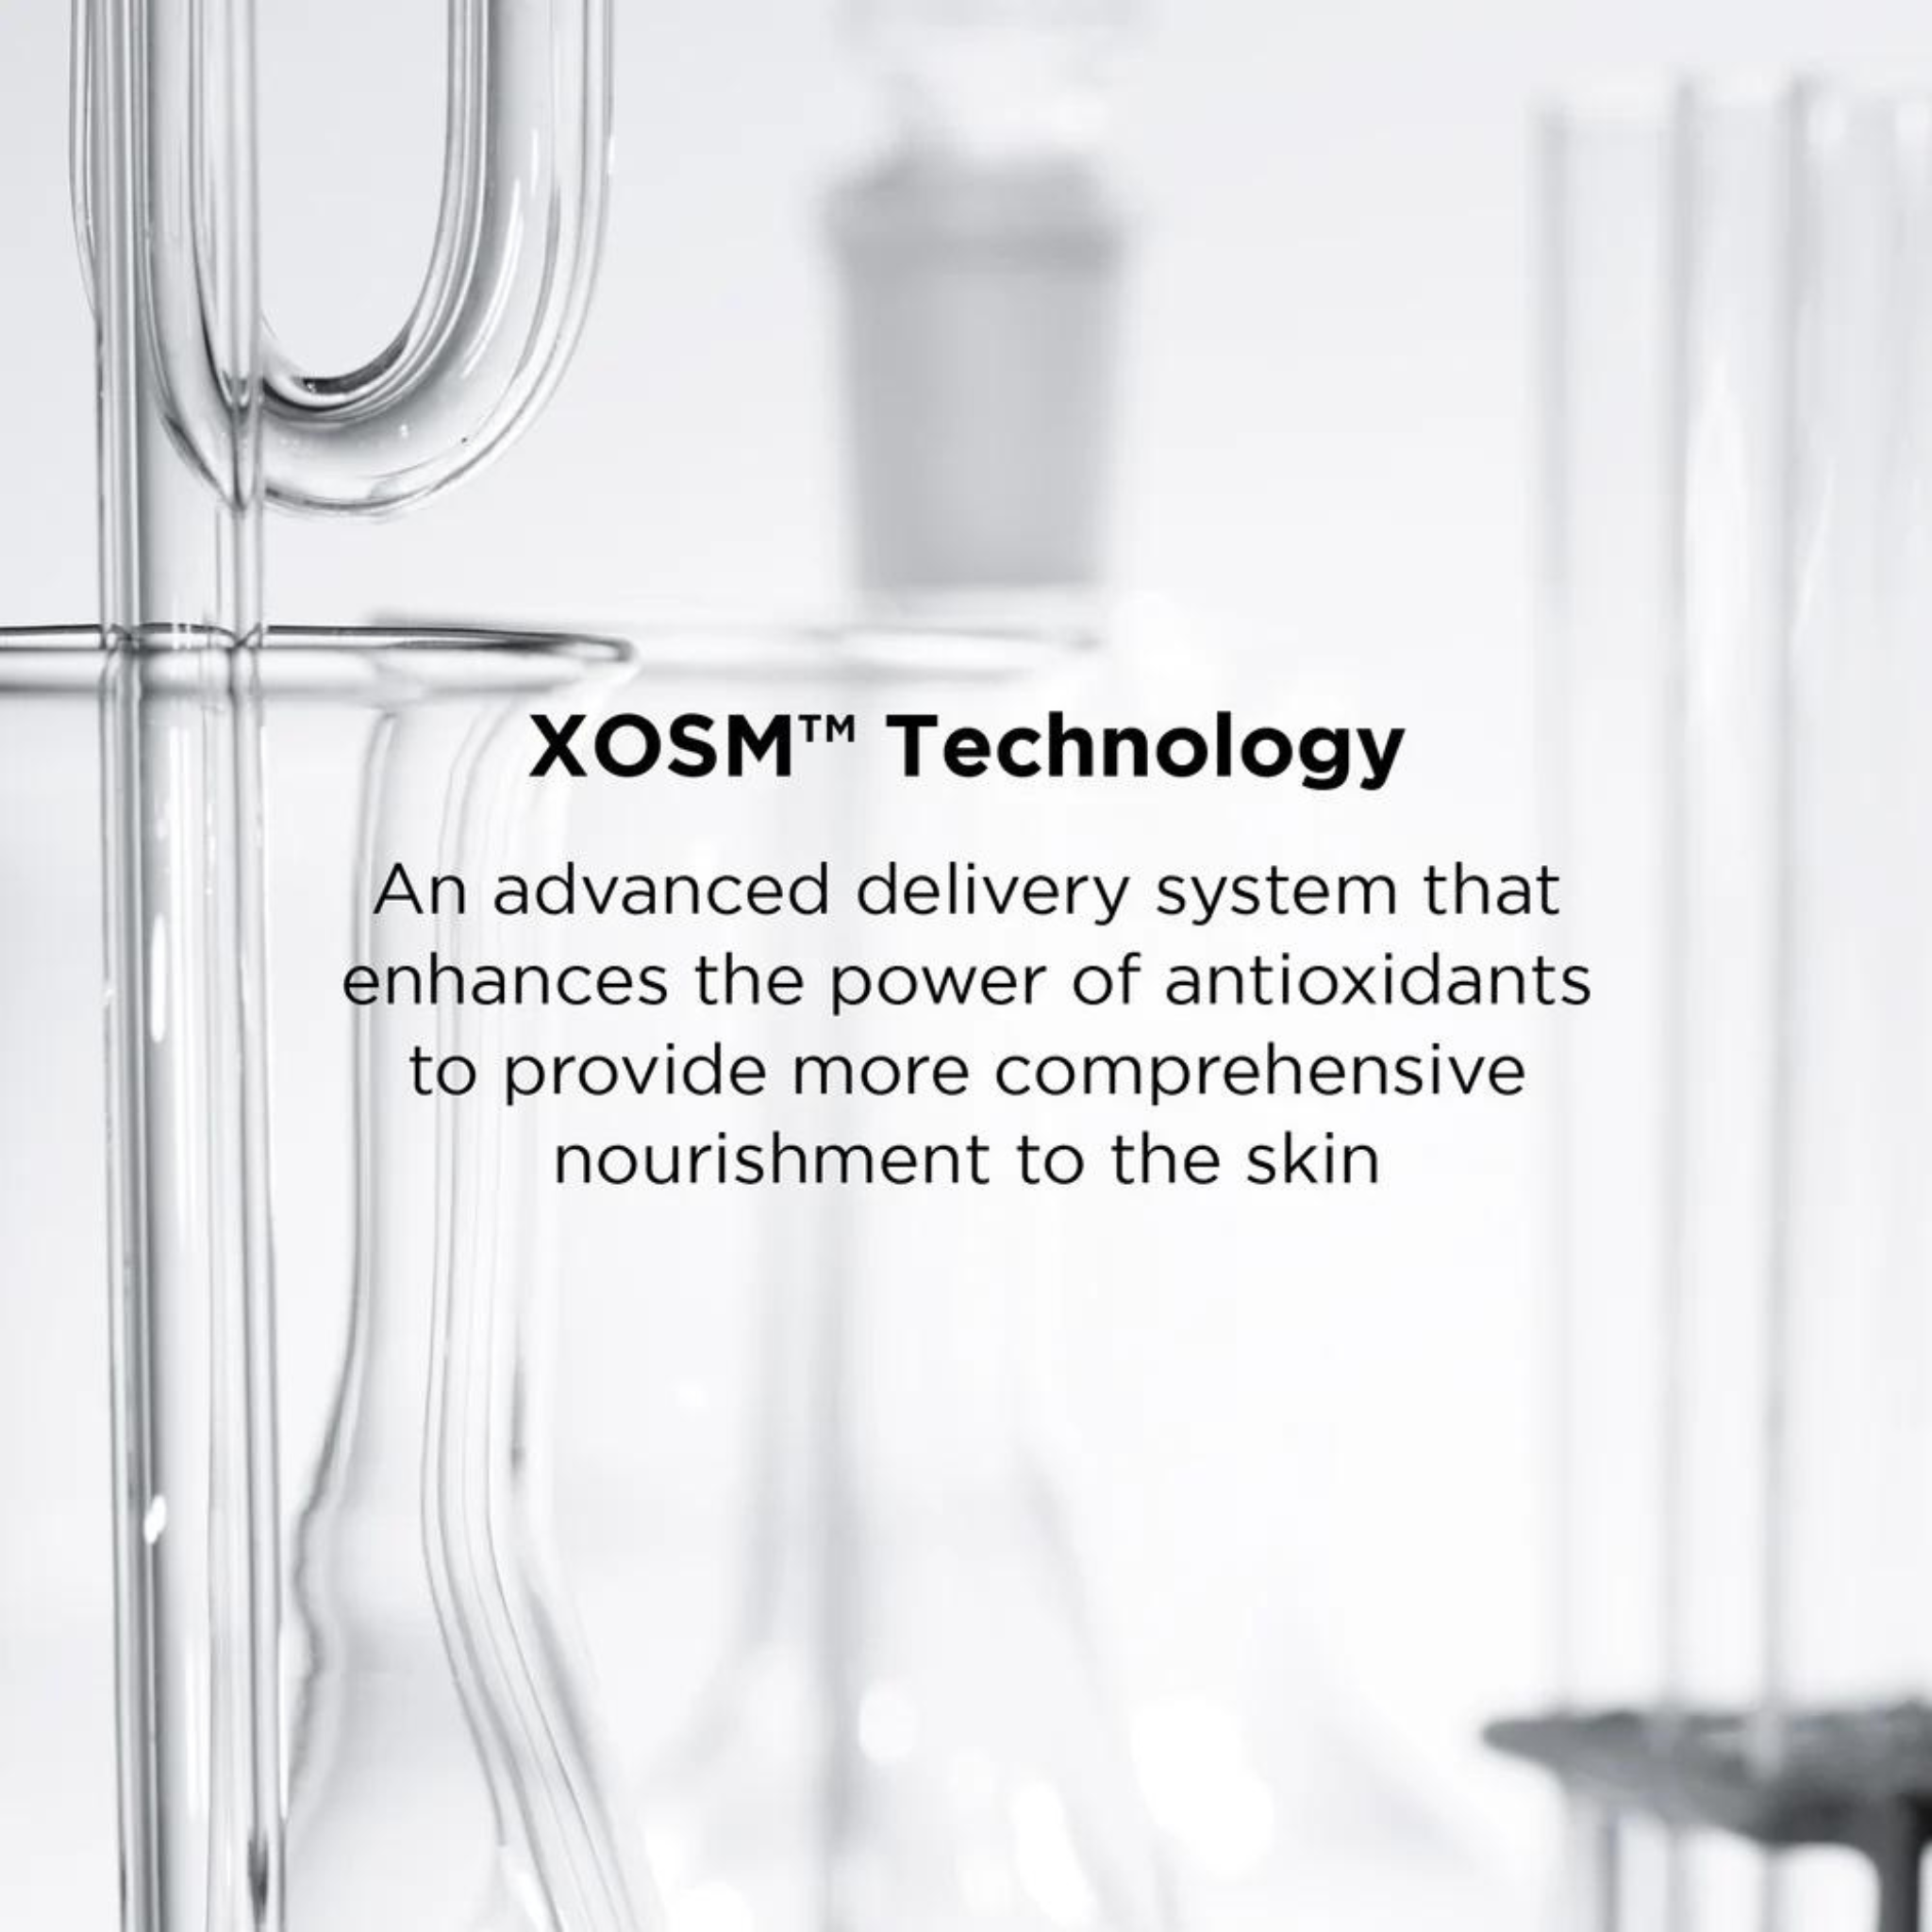 brief explaination of the XOSM technology